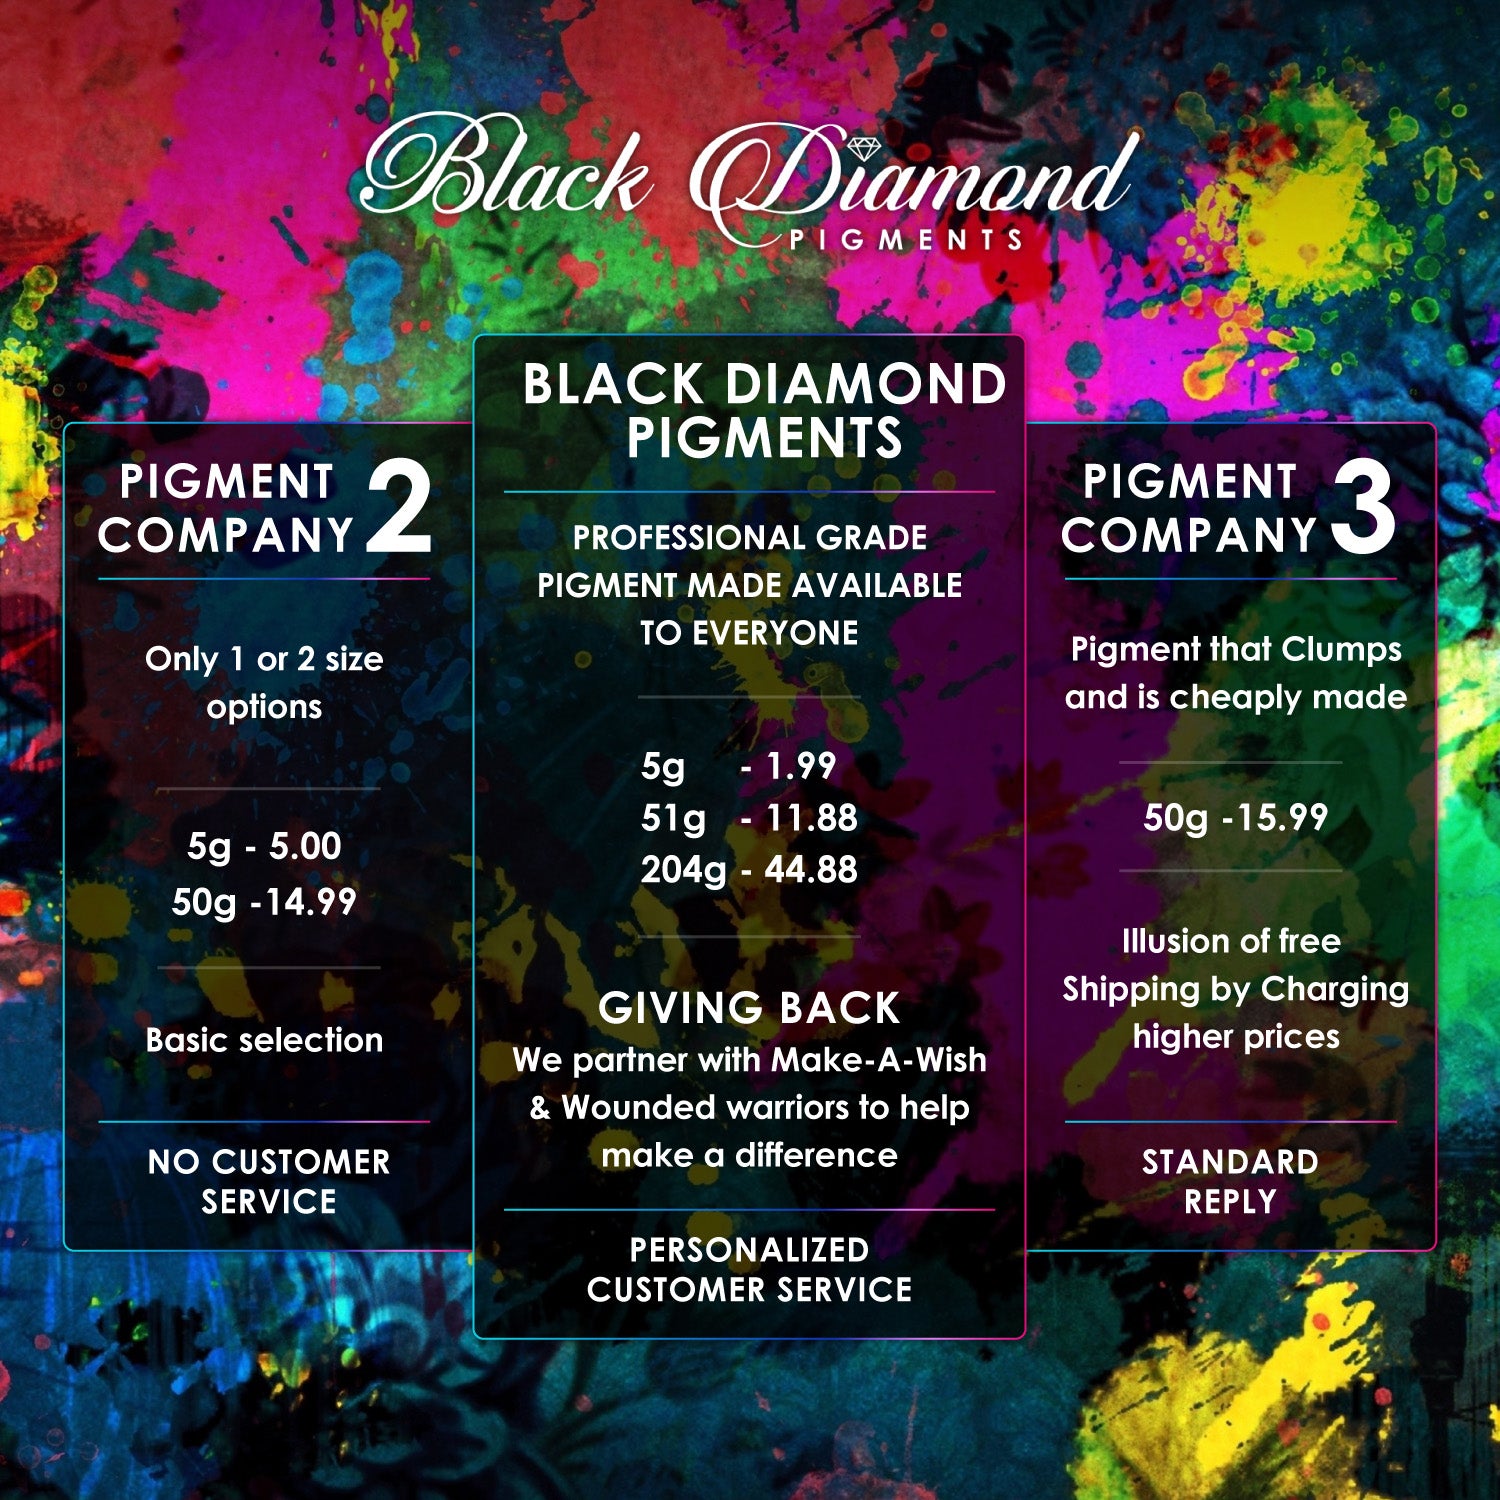 "STARRY NIGHT" Black Diamond Pigments